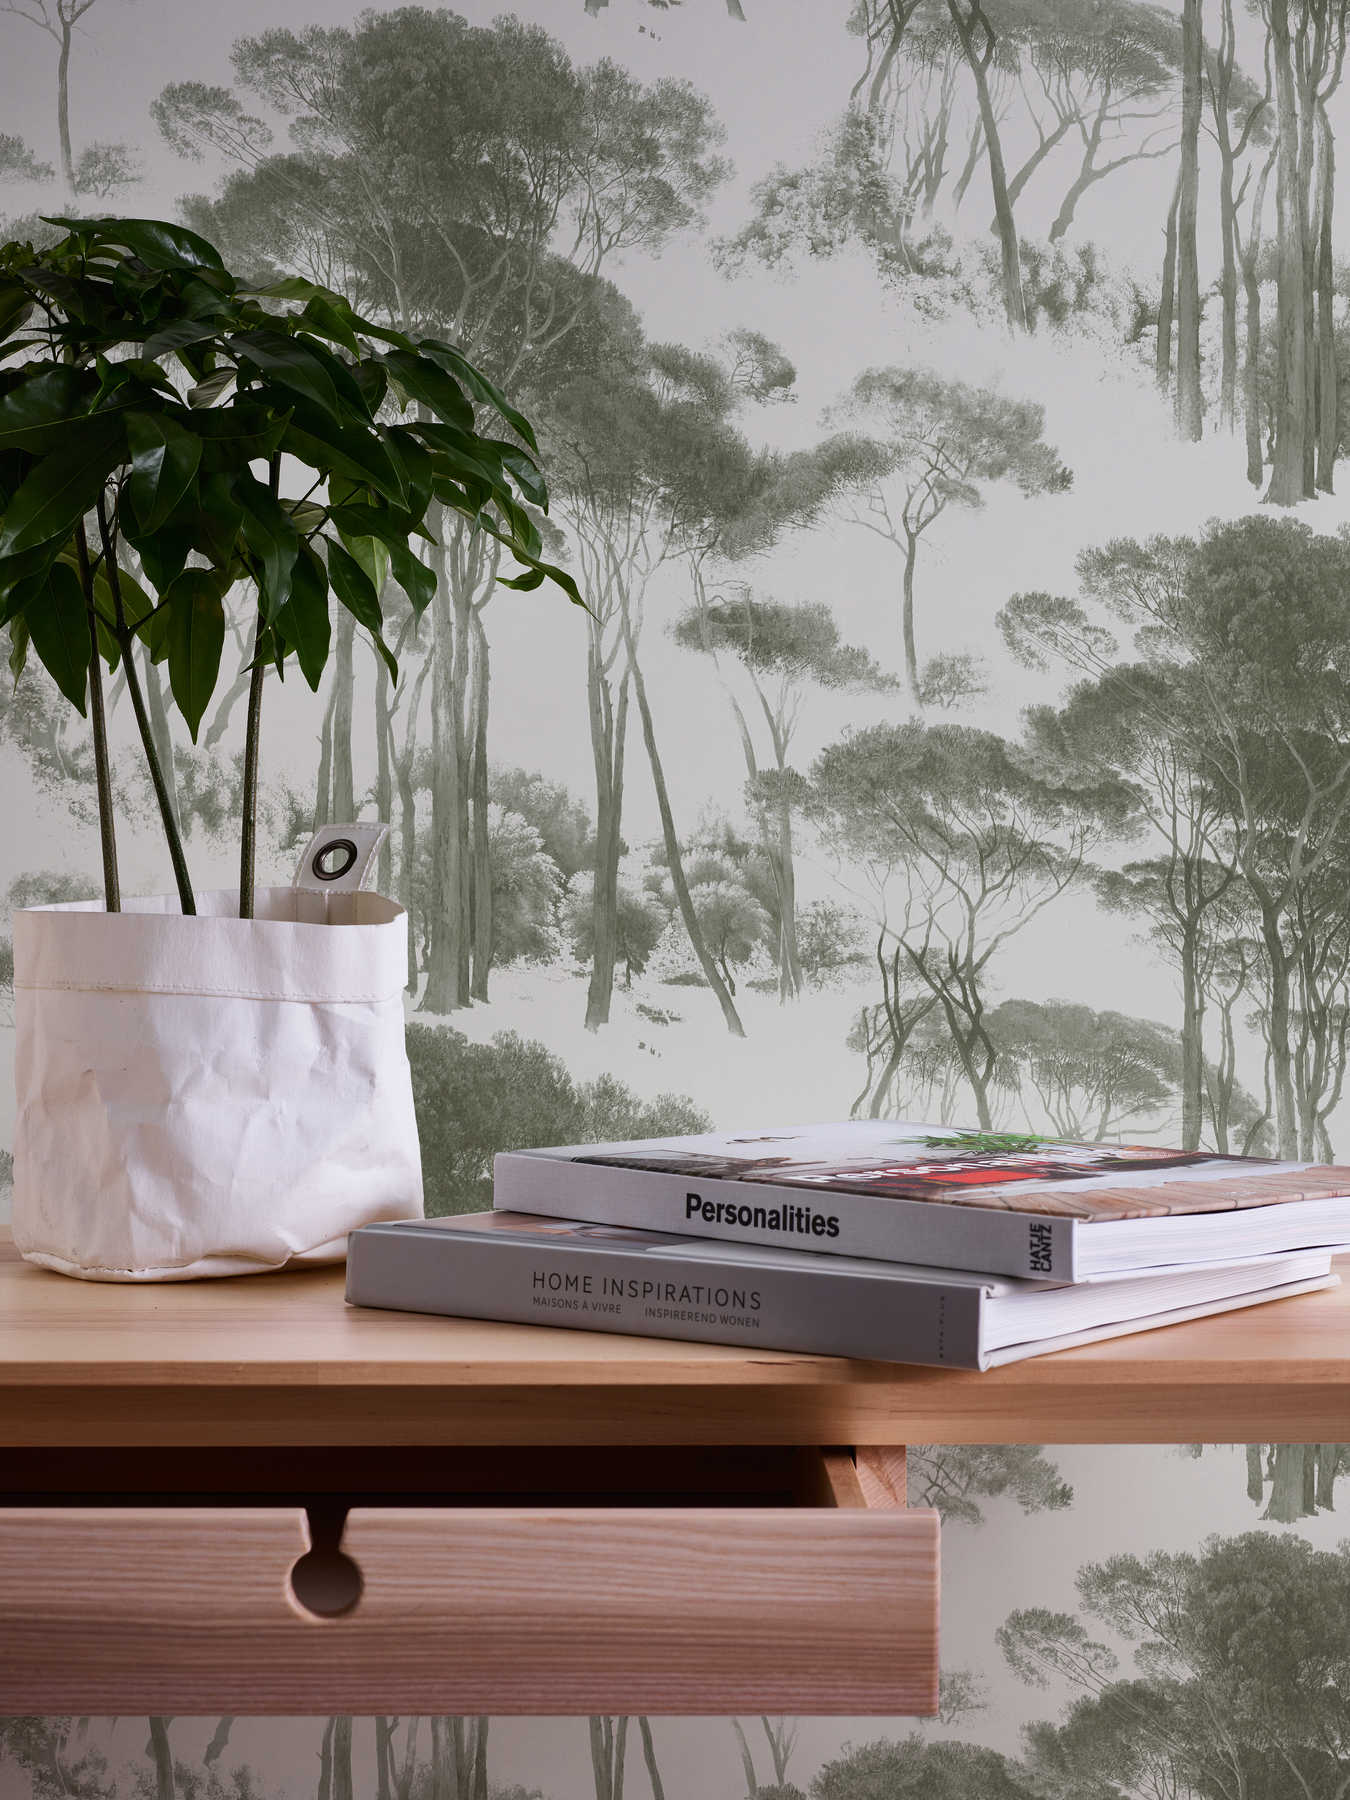             Wallpaper stylized forest landscape - green, white
        